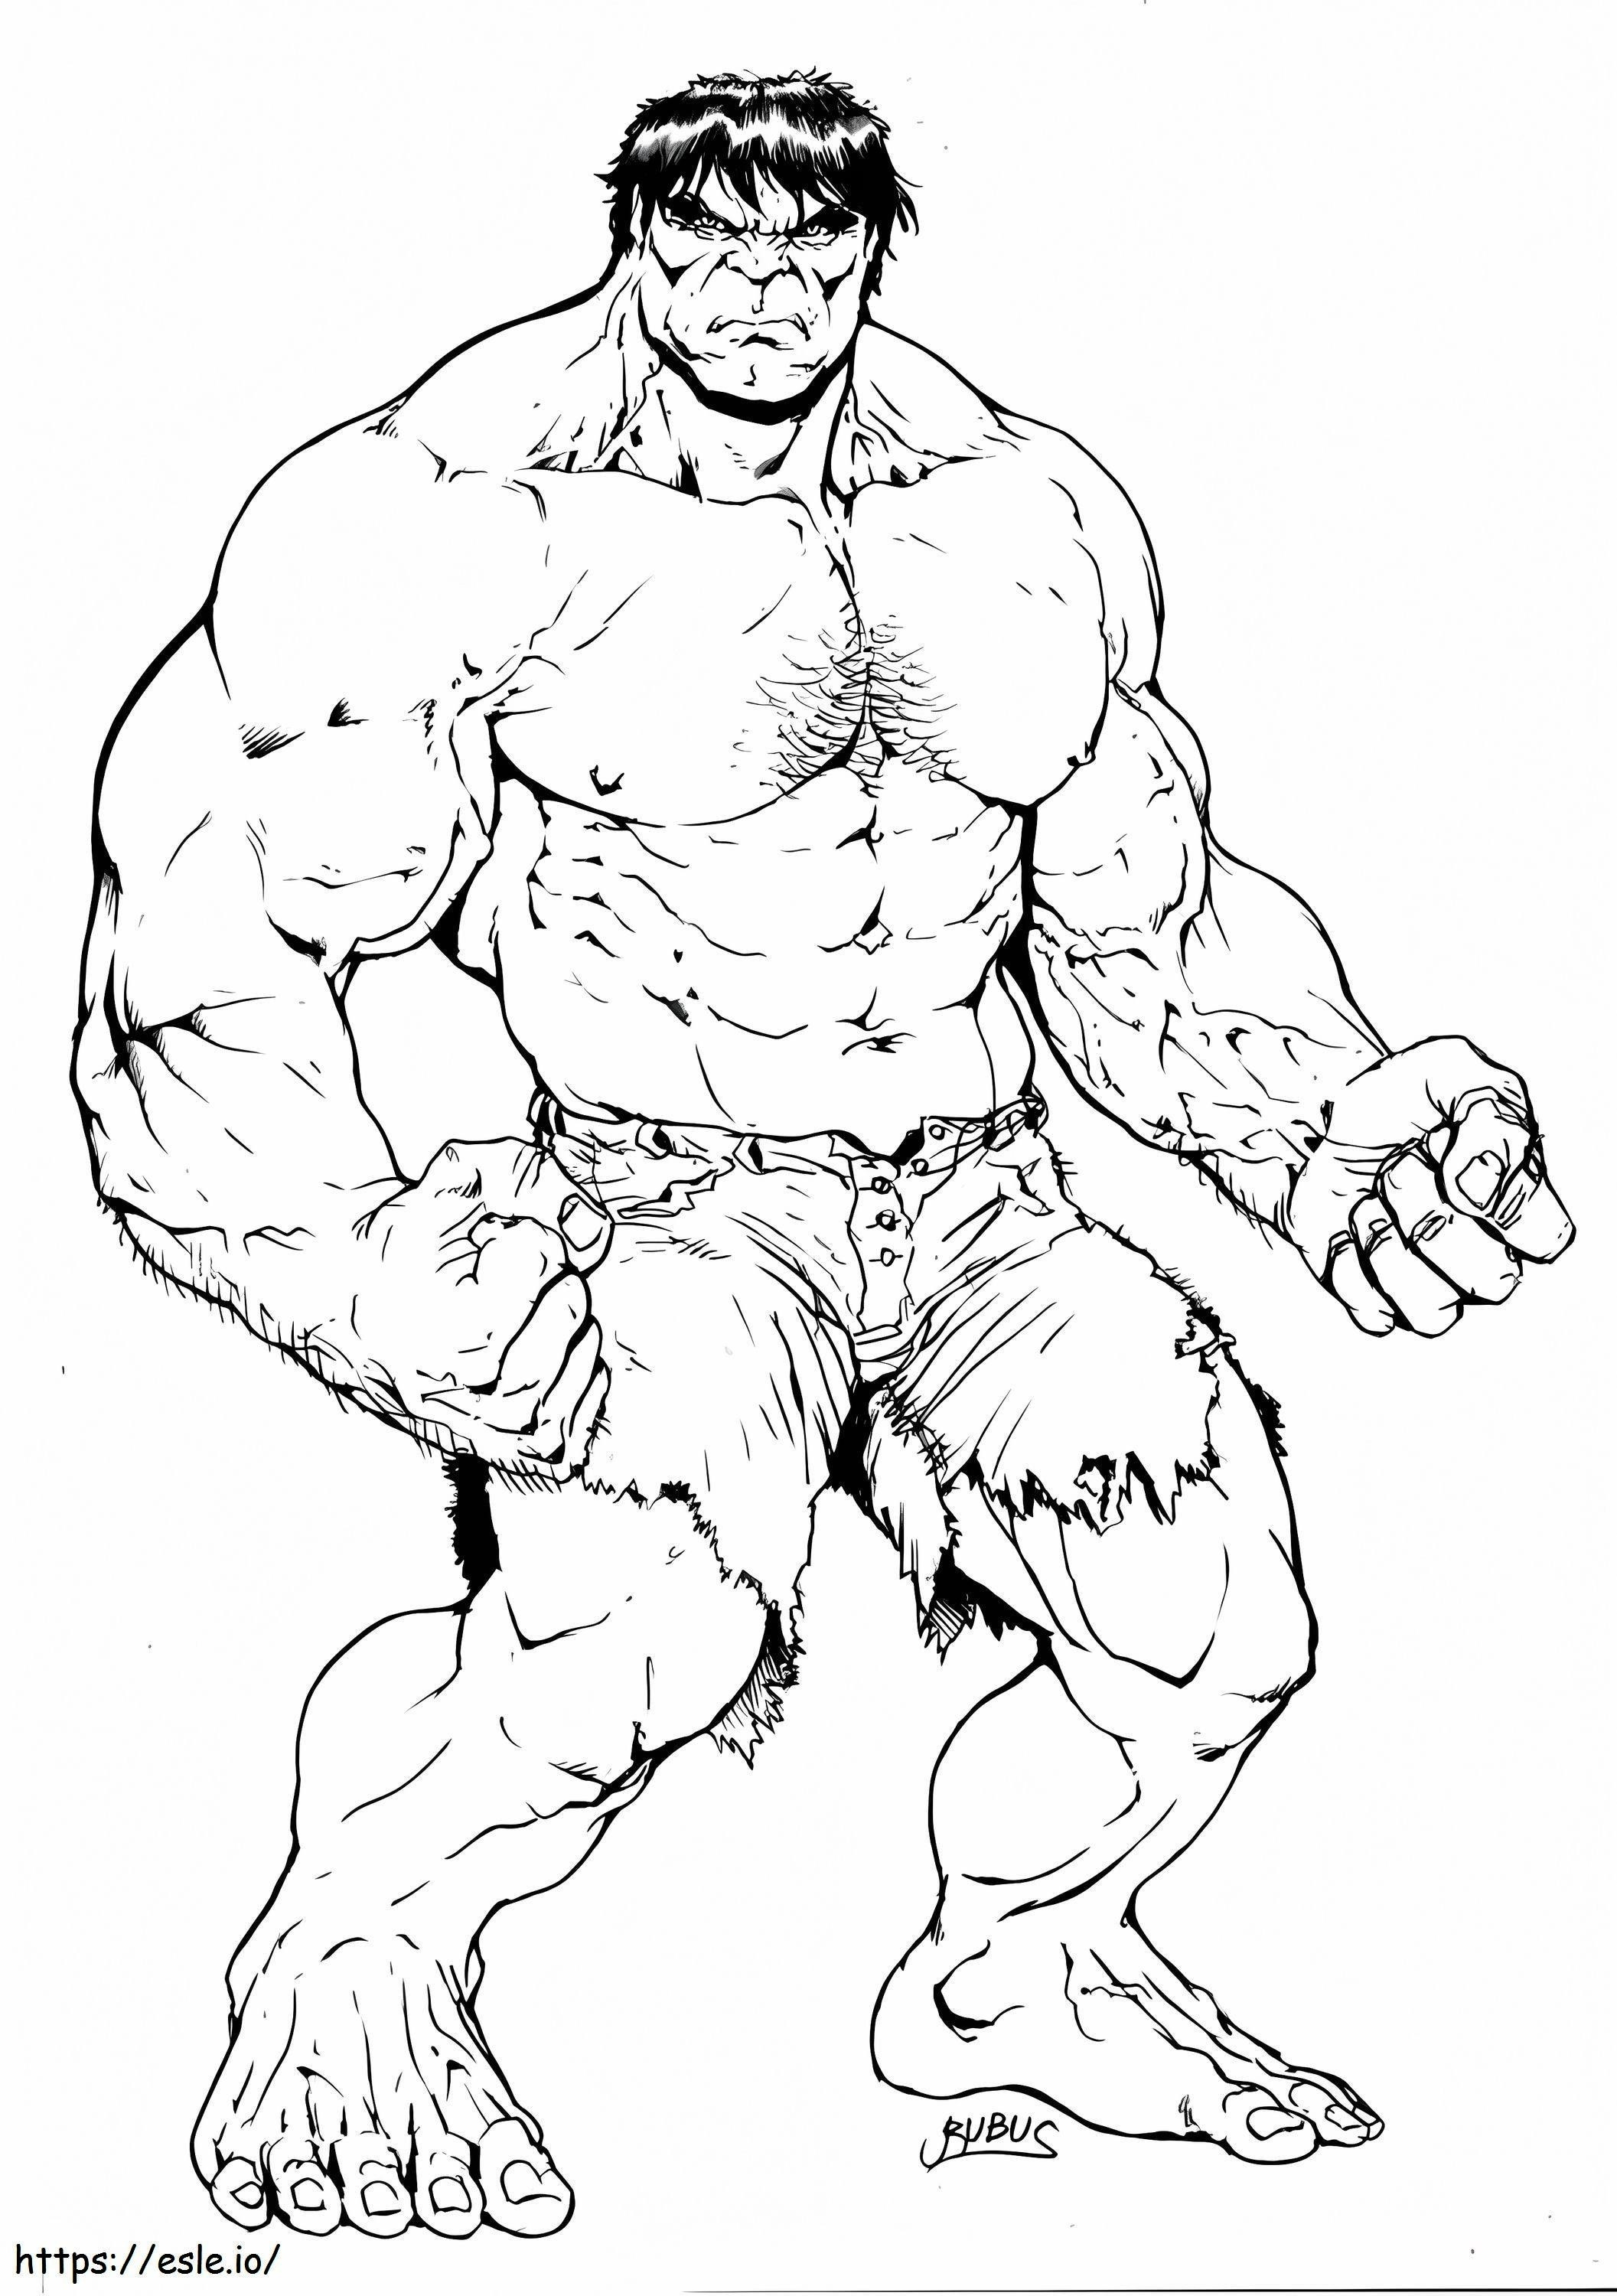 Großer Hulk ausmalbilder